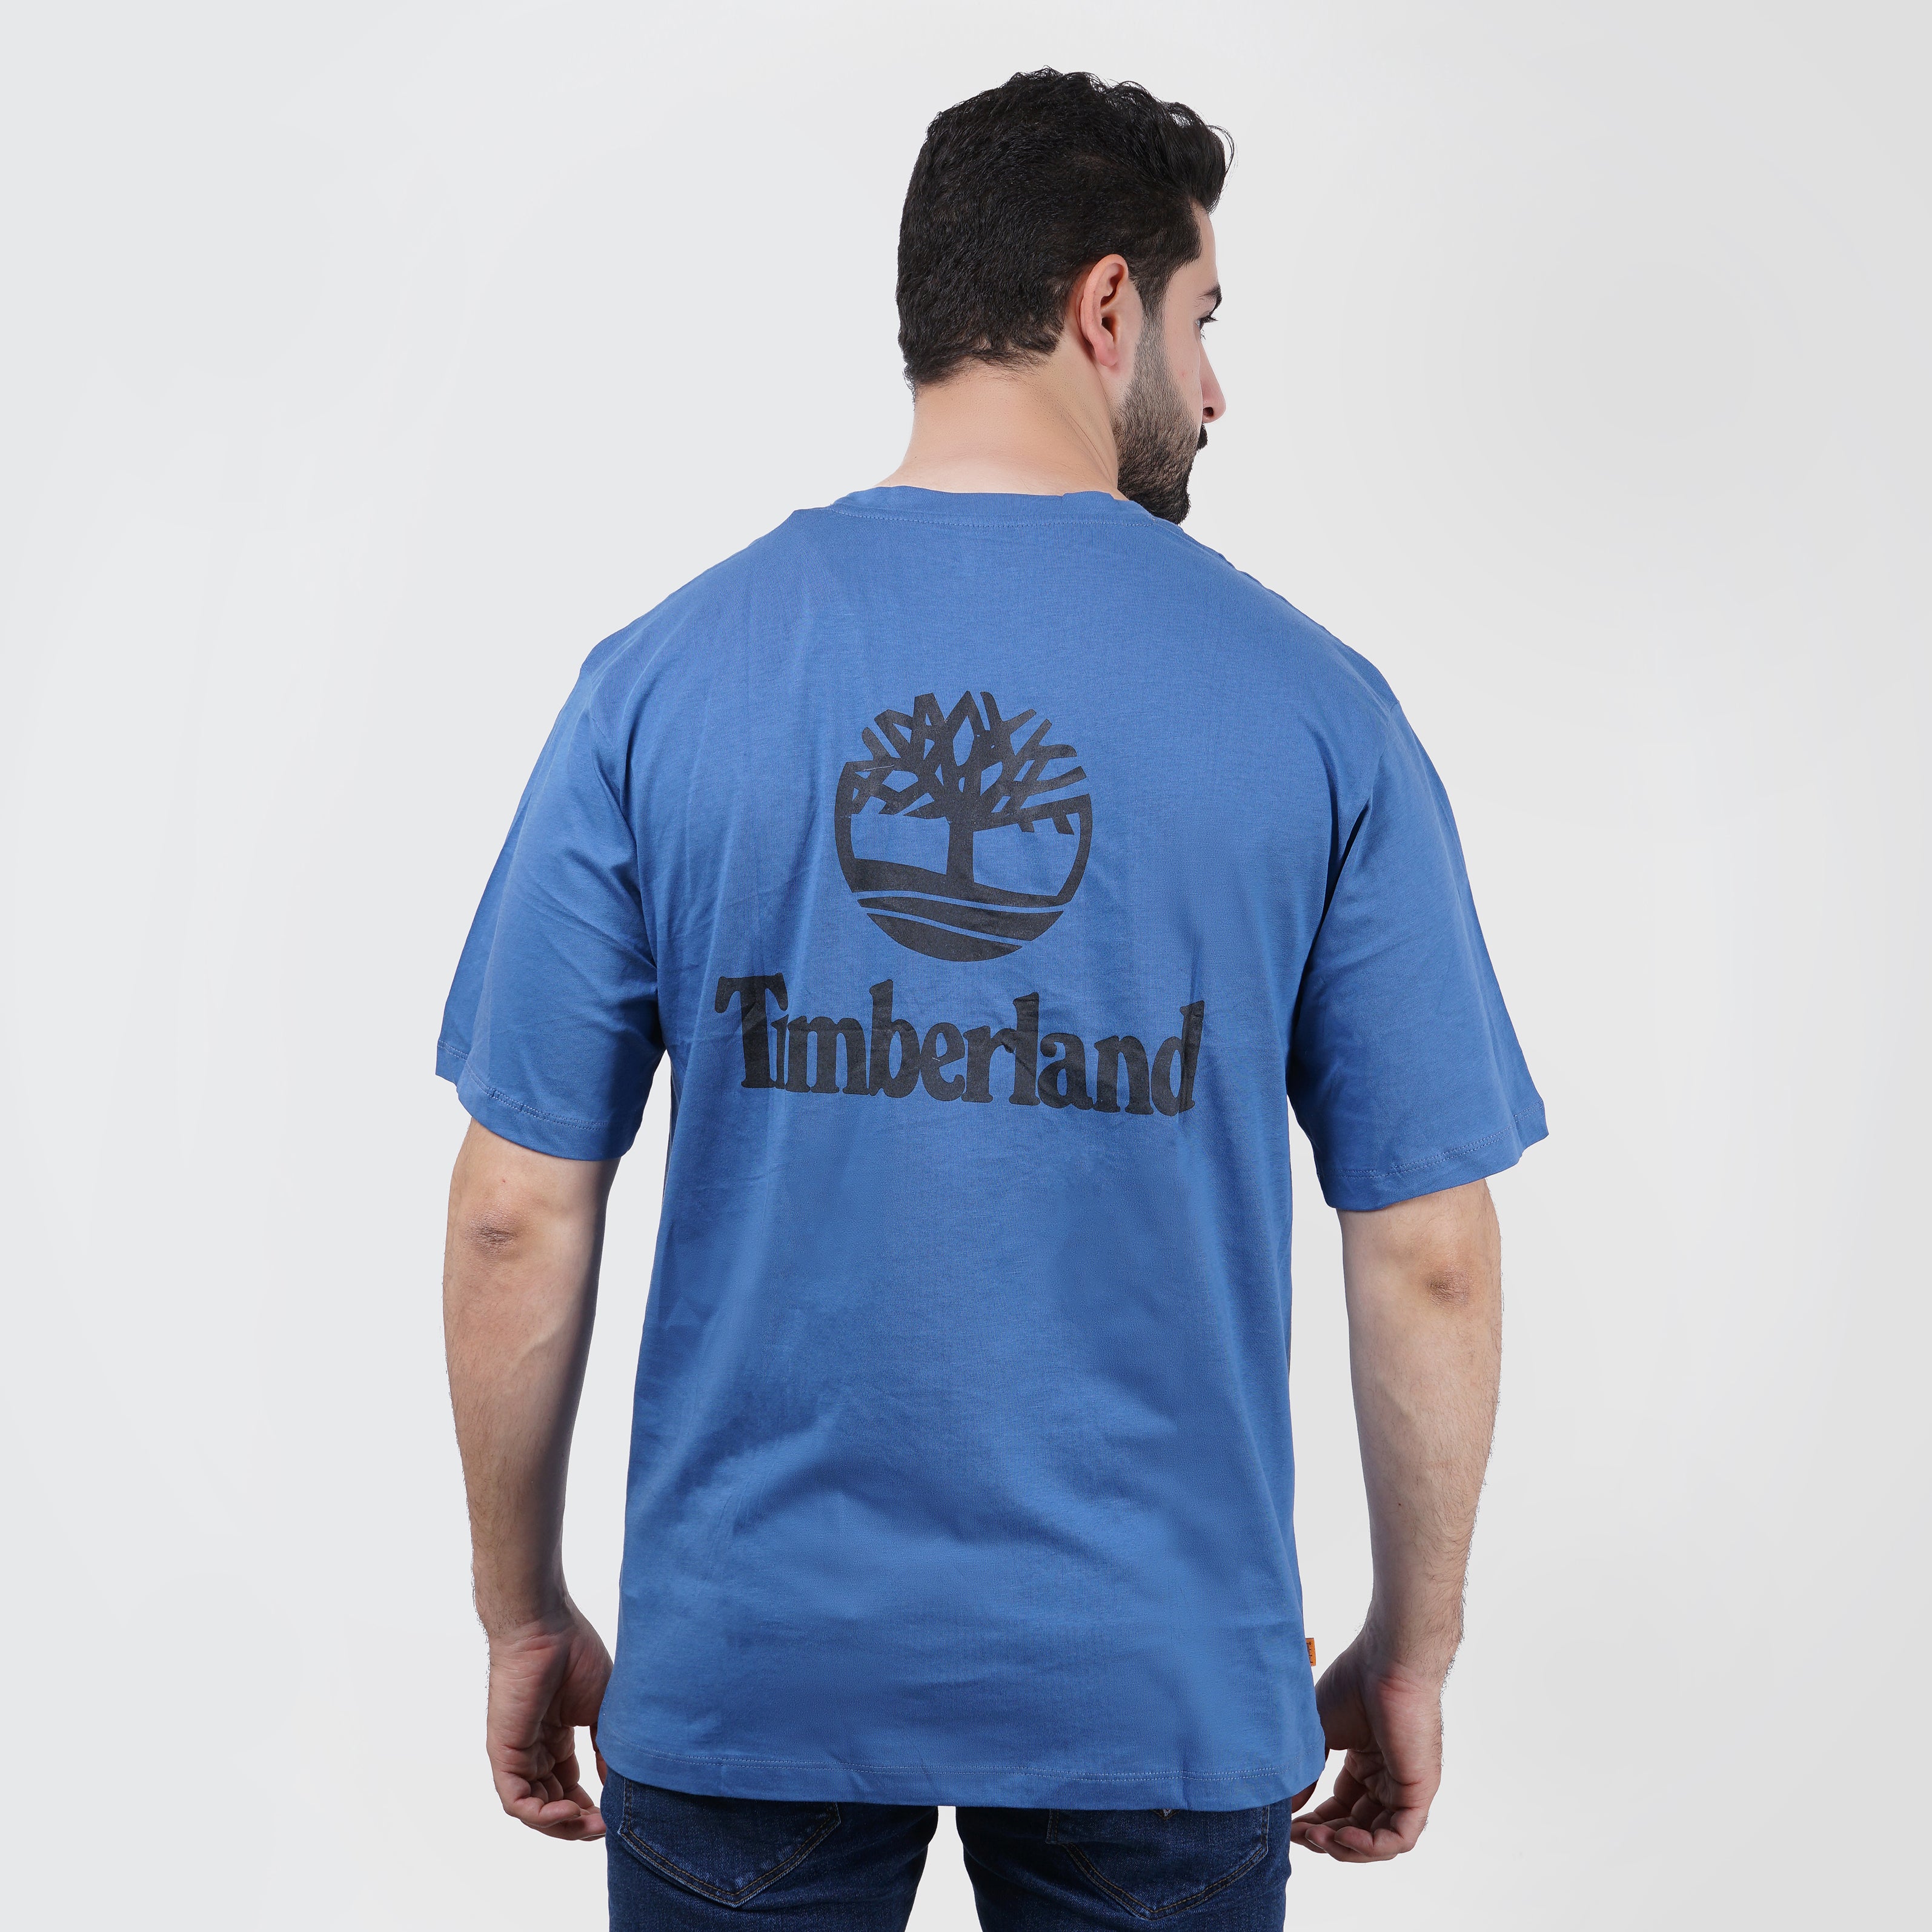 Man wearing blue Timberland logo t-shirt, rear view, on white background.